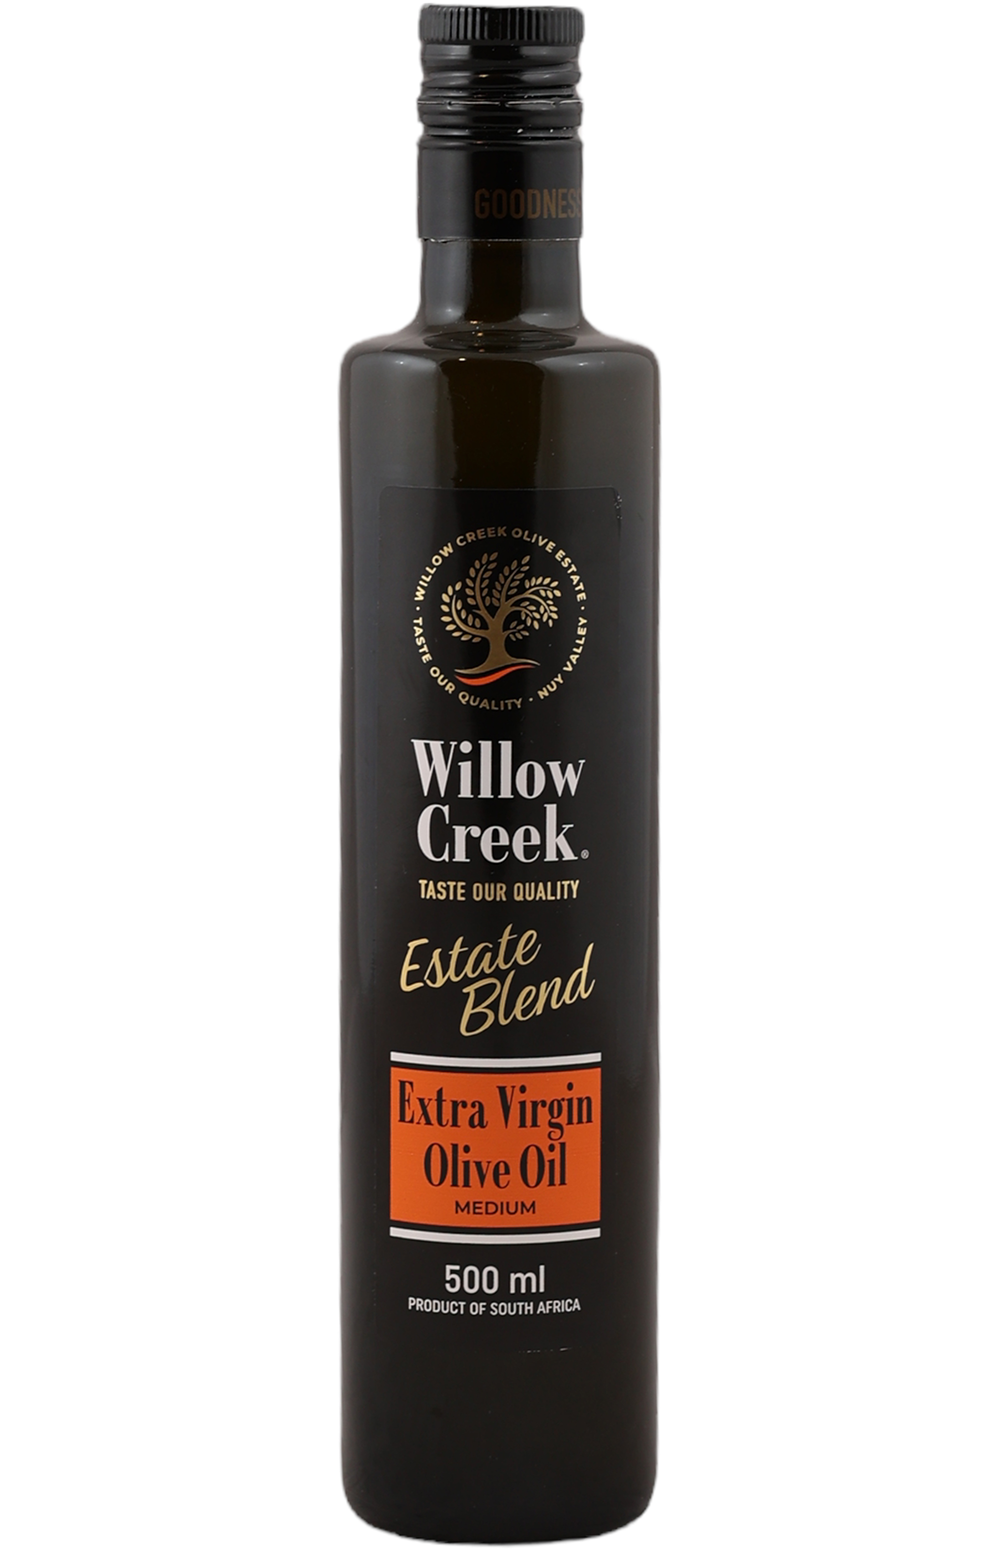 Willow creek Estate Blend Extra Virgin Olive Oil